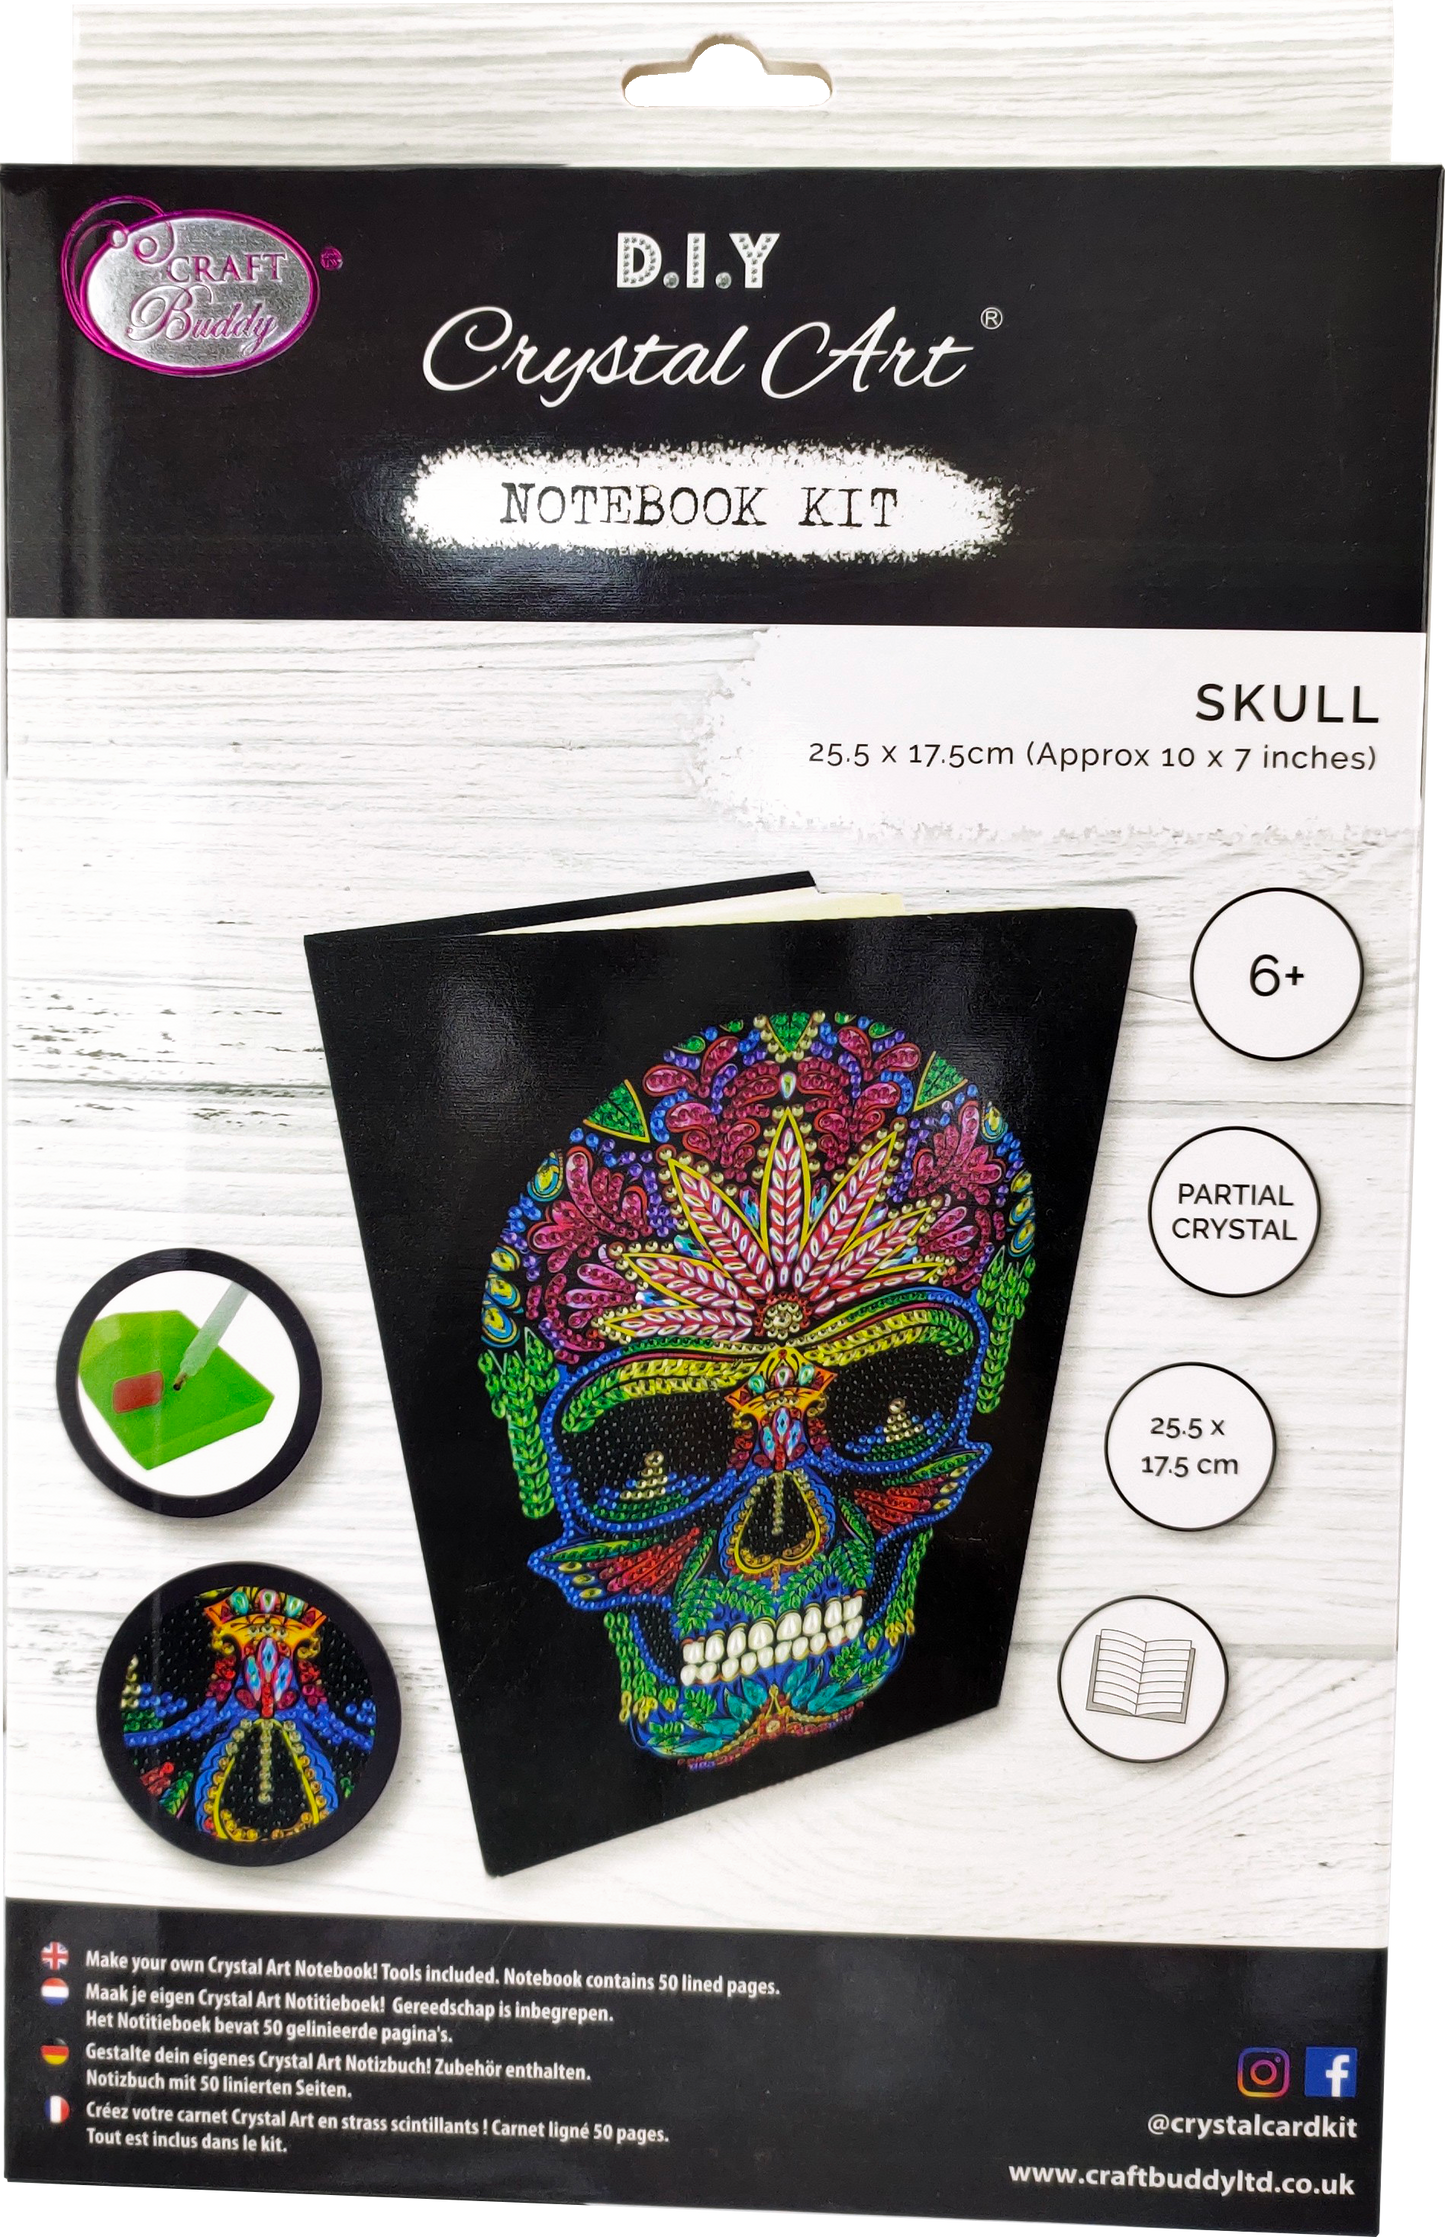 CANJ-4 "Skull" Crystal Art Notebook Kit, 26 x 18cm